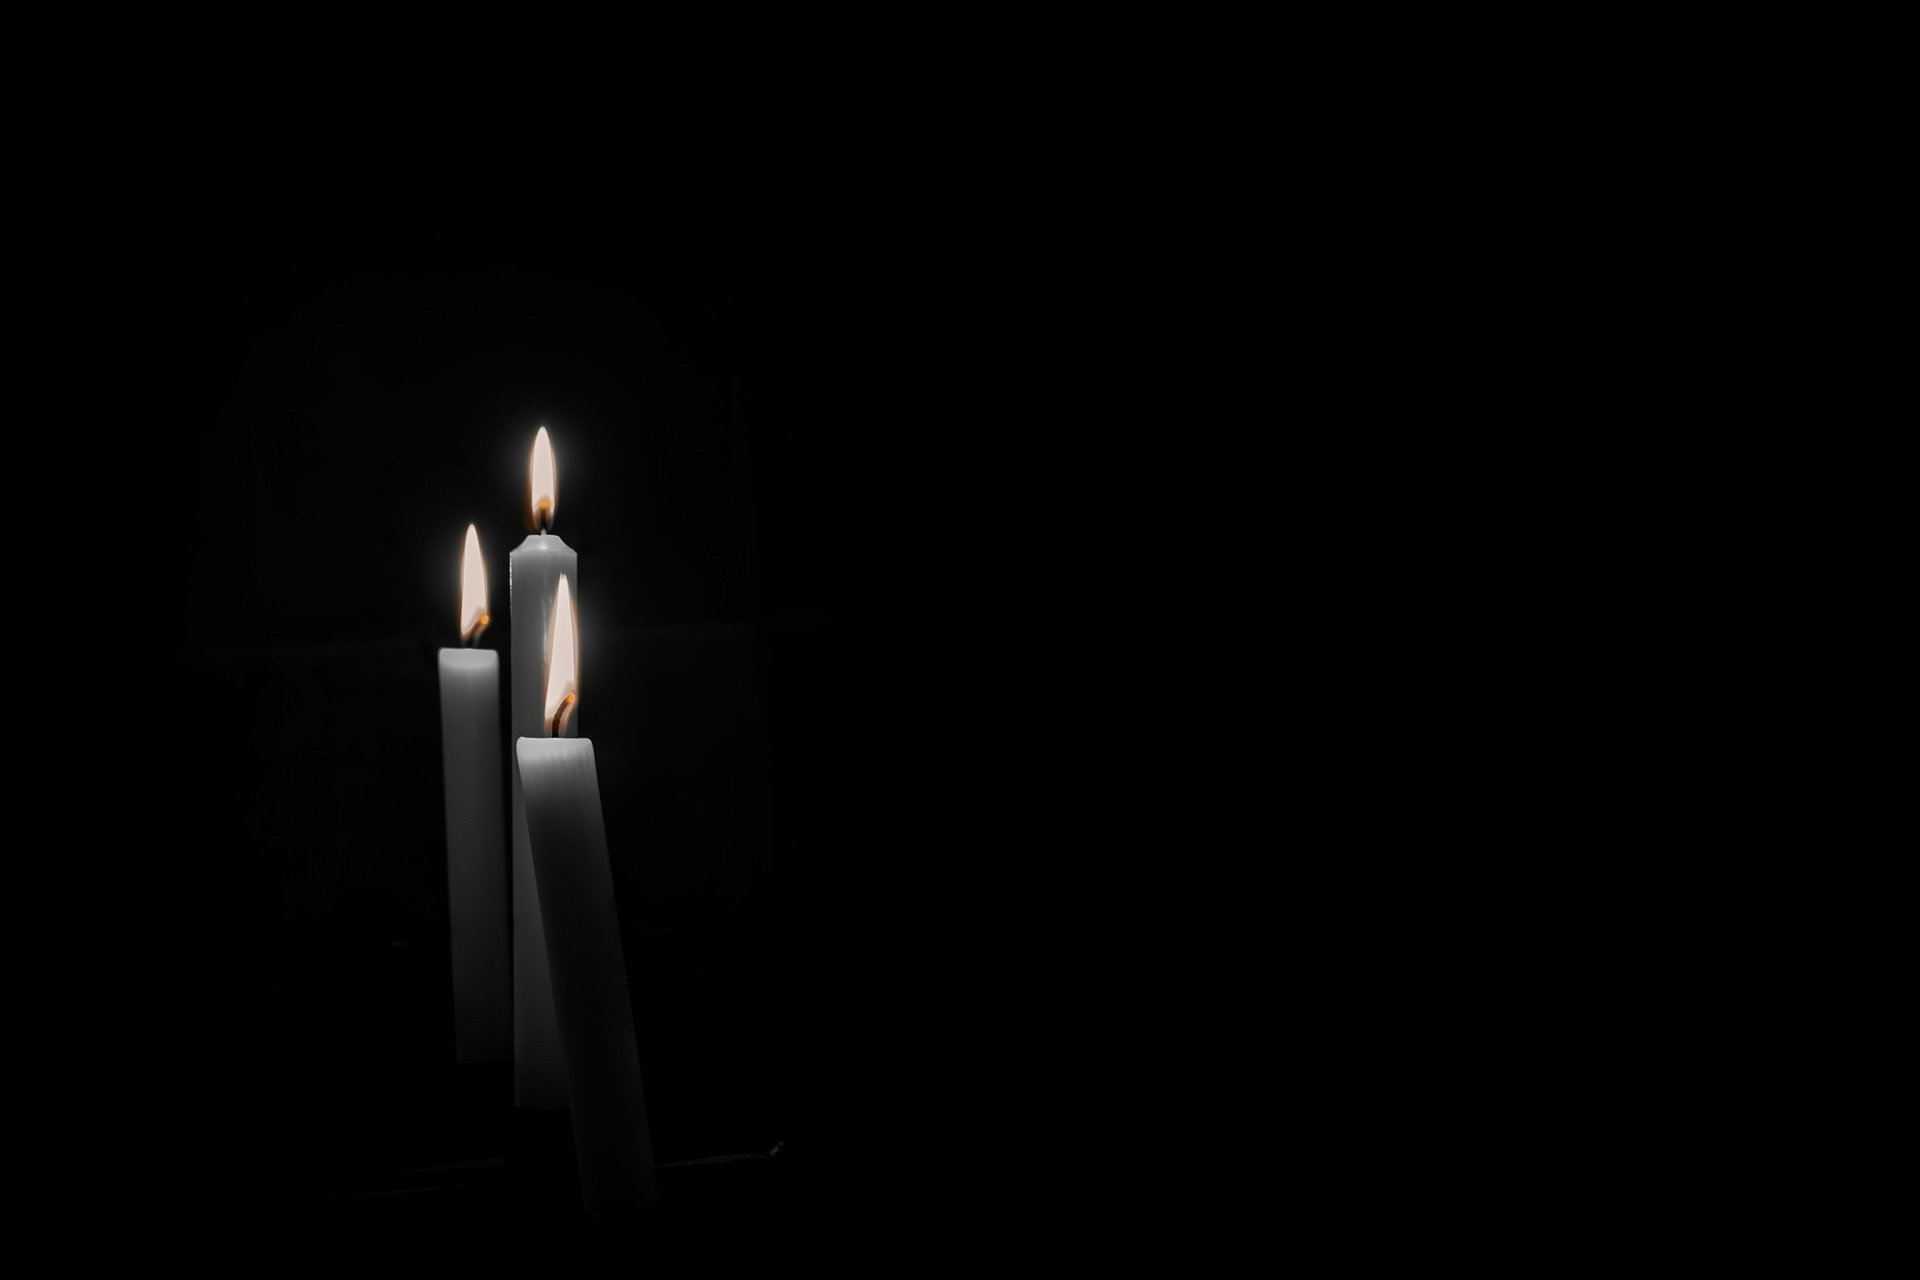 траурное фото со свечой